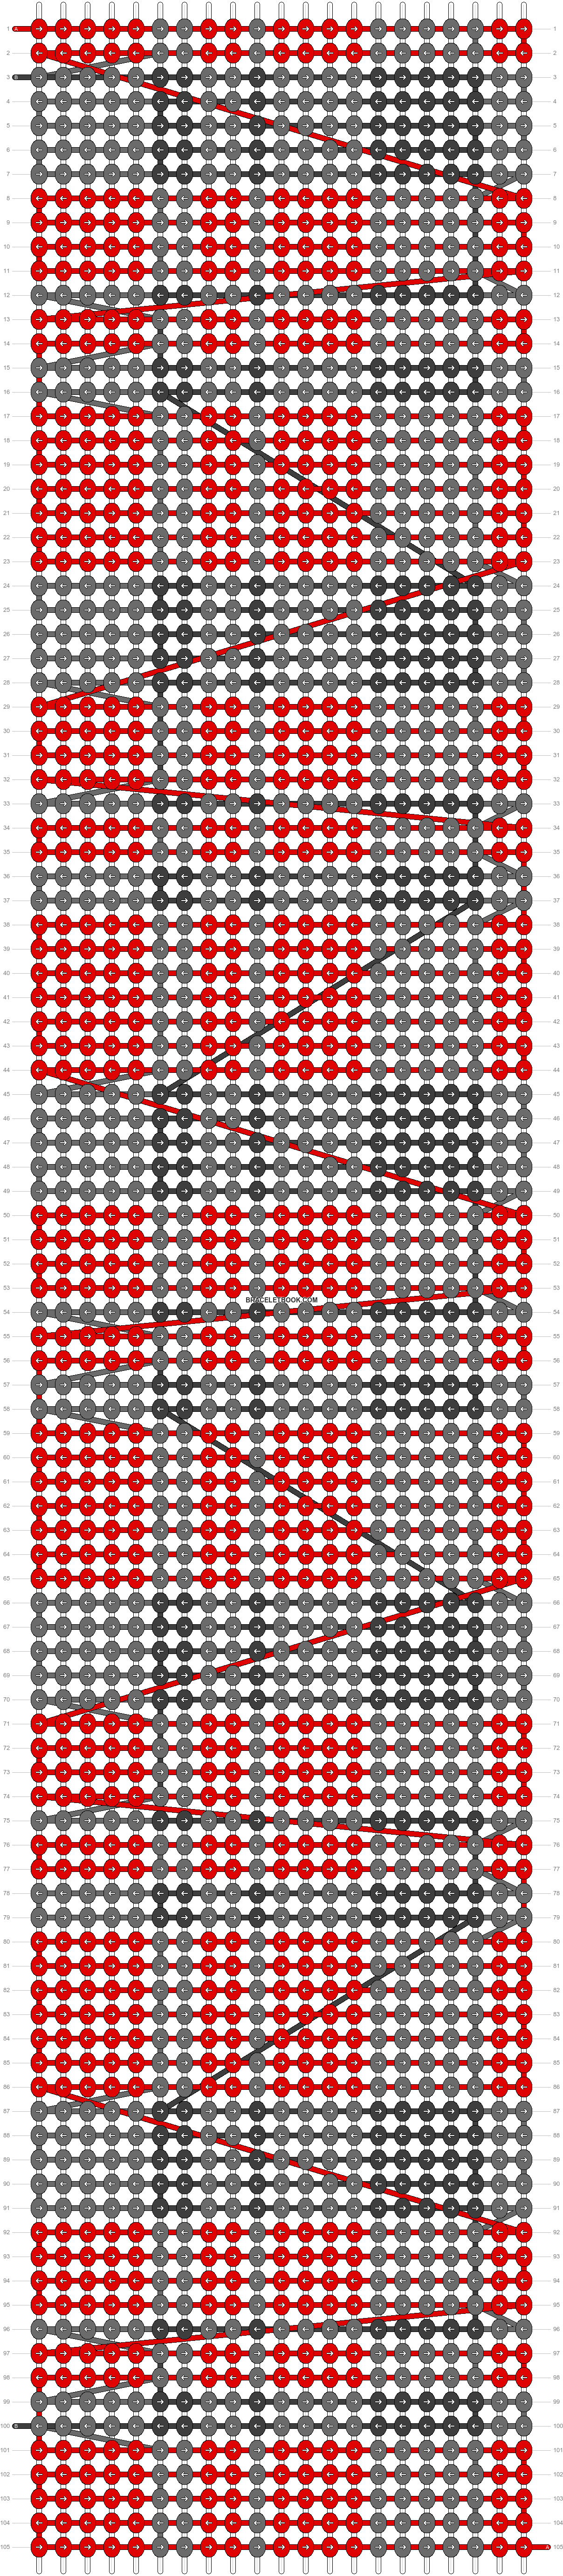 Alpha pattern #16564 pattern